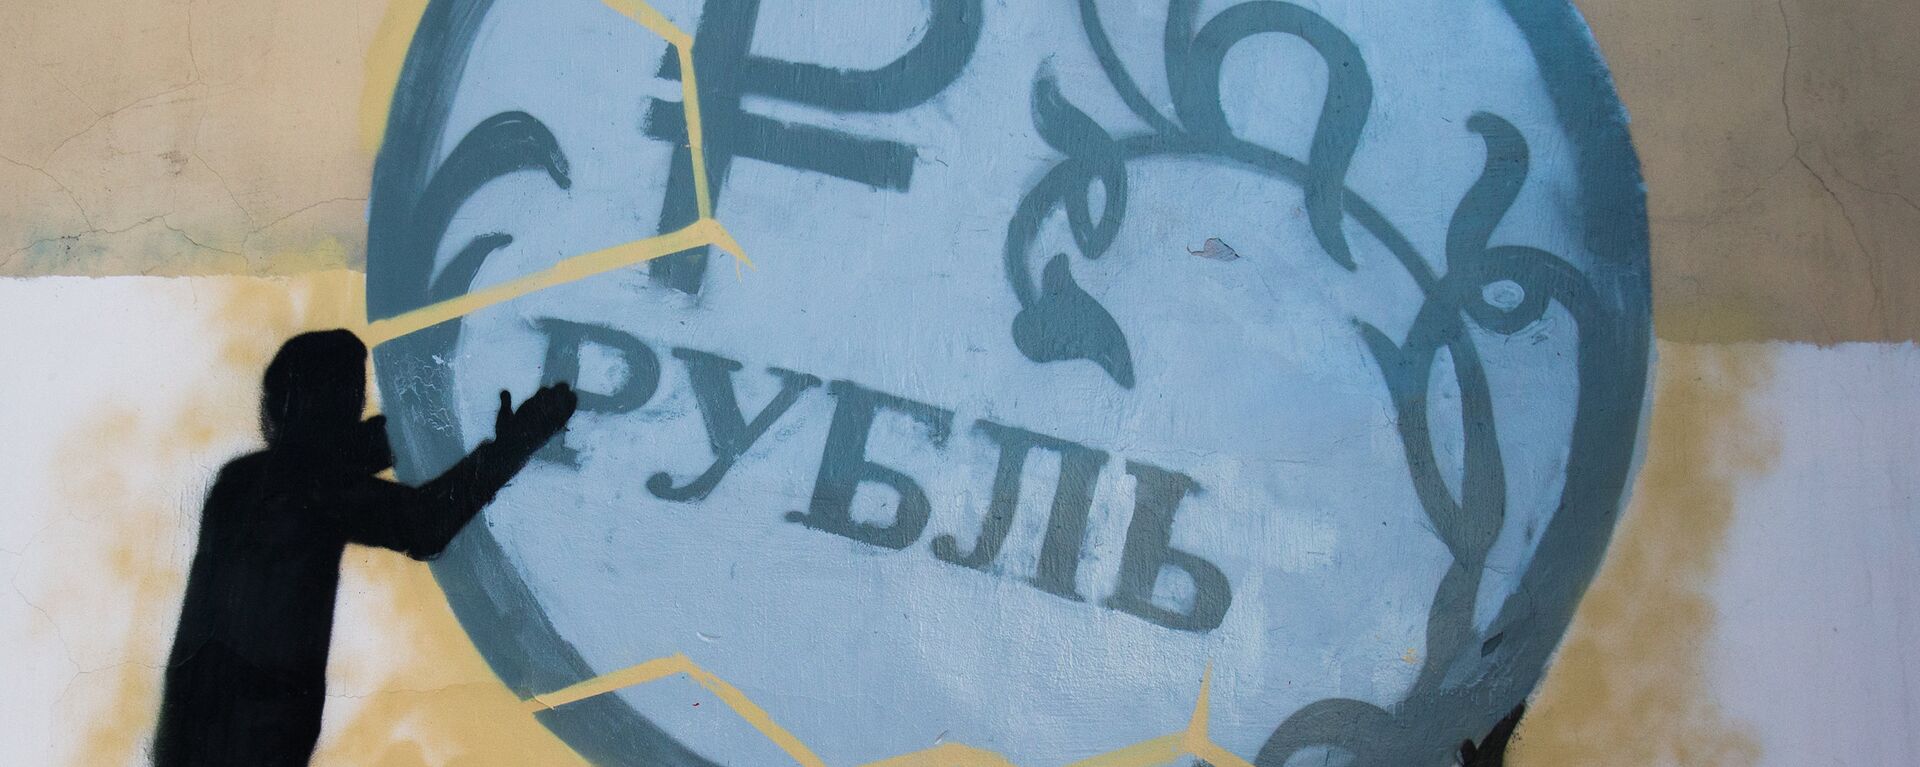 Russian currency ruble on a graffiti in St. Petersburg - Sputnik International, 1920, 09.03.2022